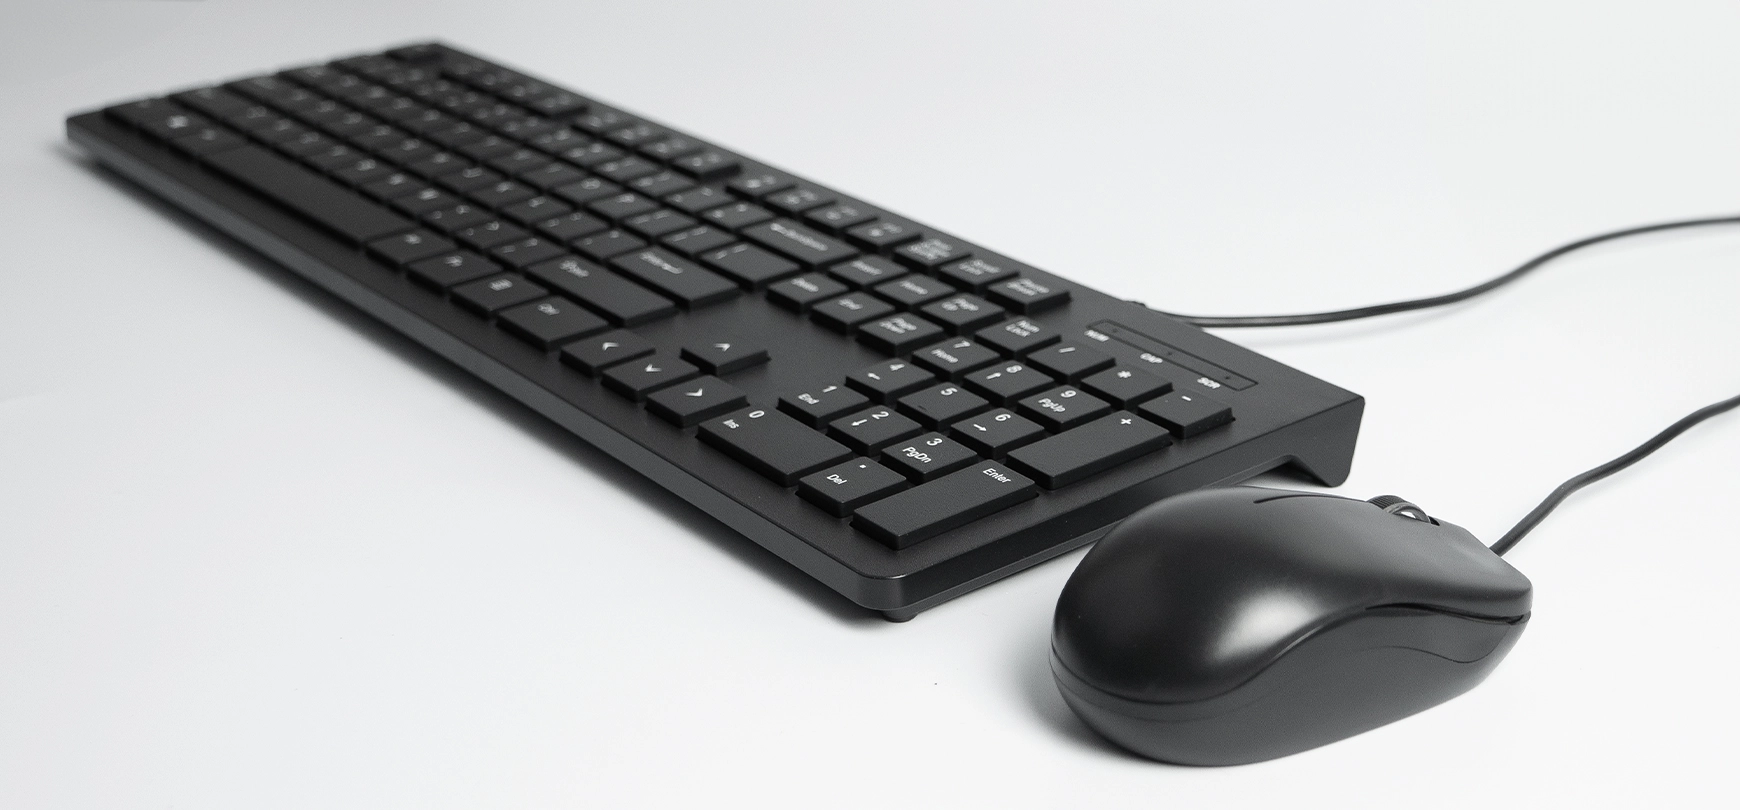 Minimalistický počítačový set - myš a klávesnice, černý